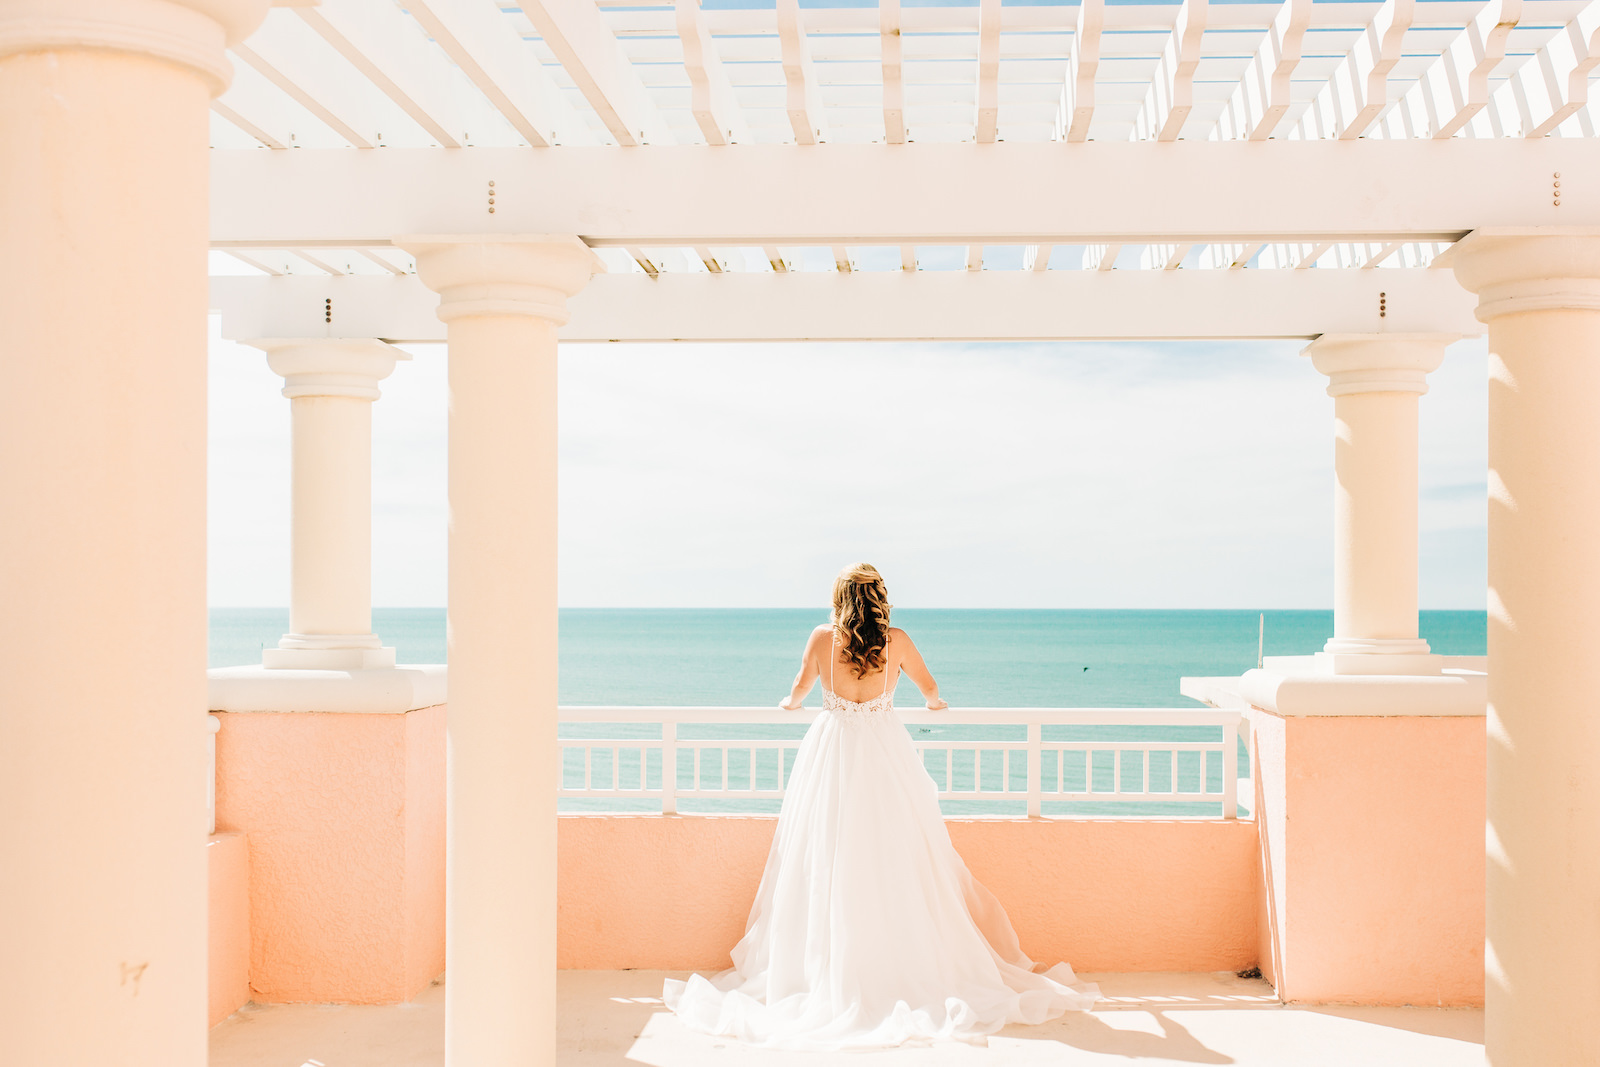 Tampa Bay Bride Overlooking Breathtaking Waterfront Ocean Scenery on Balcony of Wedding Venue Florida Destination Wedding Resort and Hotel Hyatt Regency Clearwater Beach